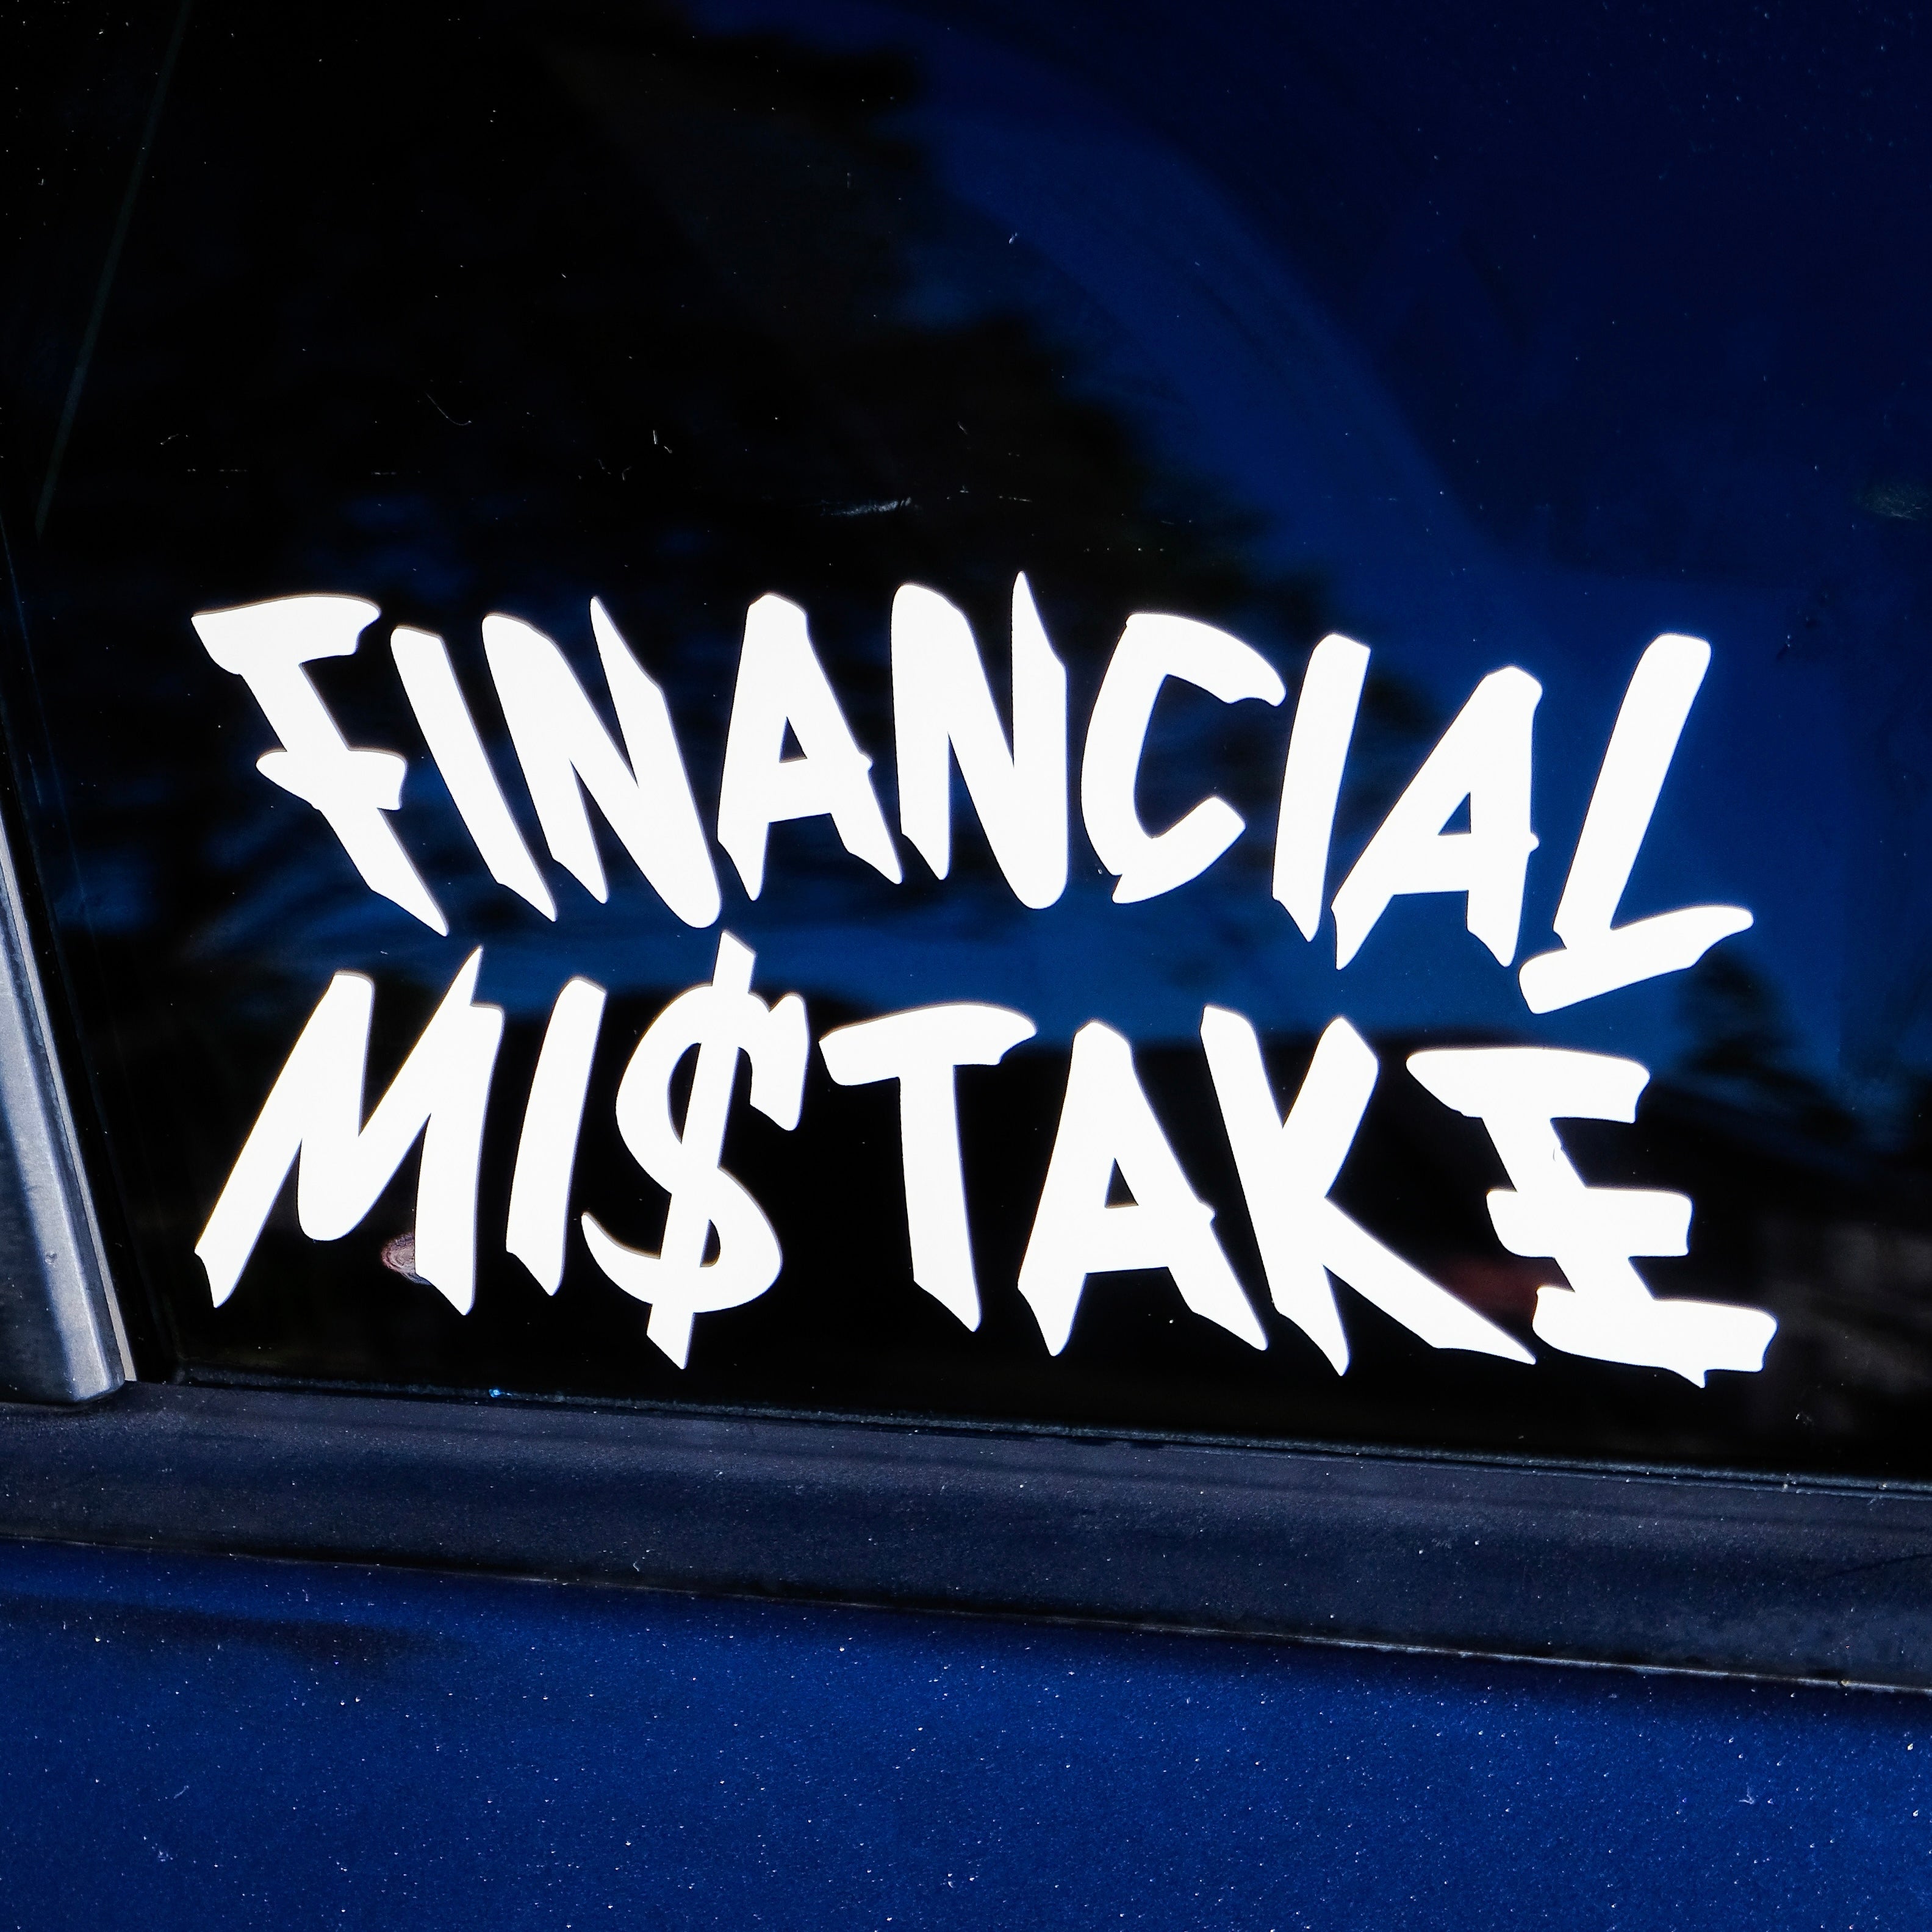 Mazushi Financial Mistake Sticker - Mazushi